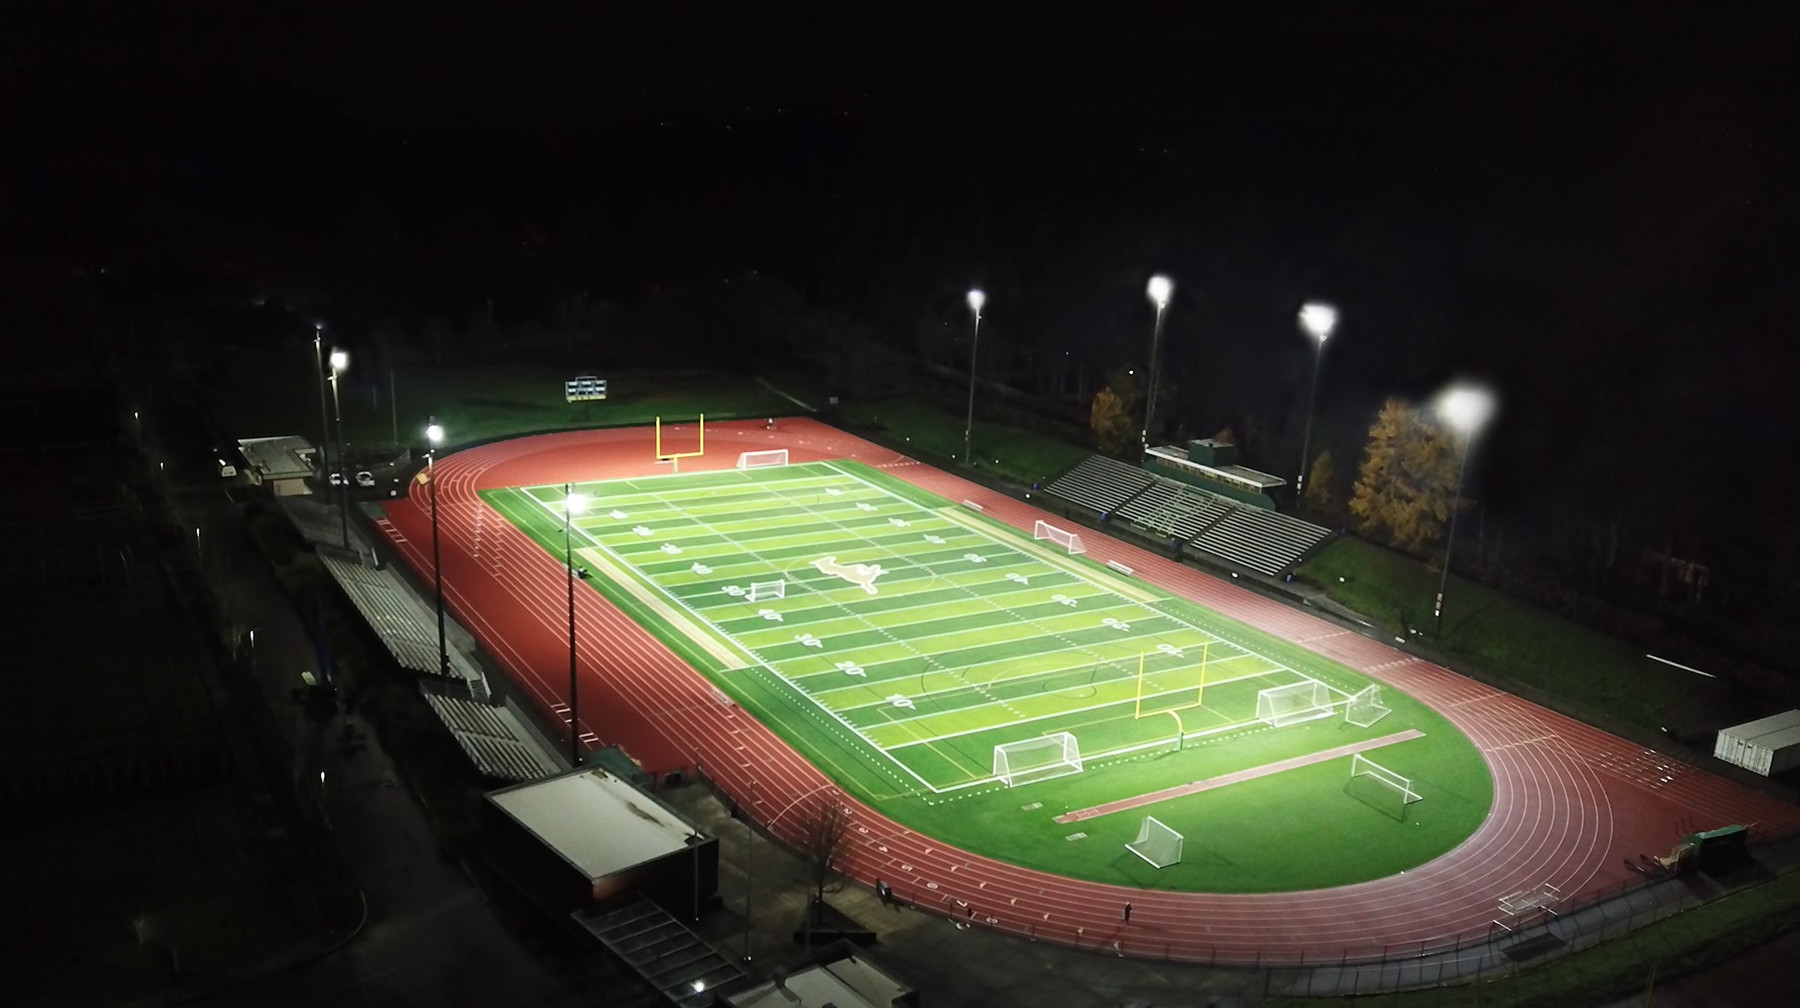 New Project: Redmond High School Football Field in USA